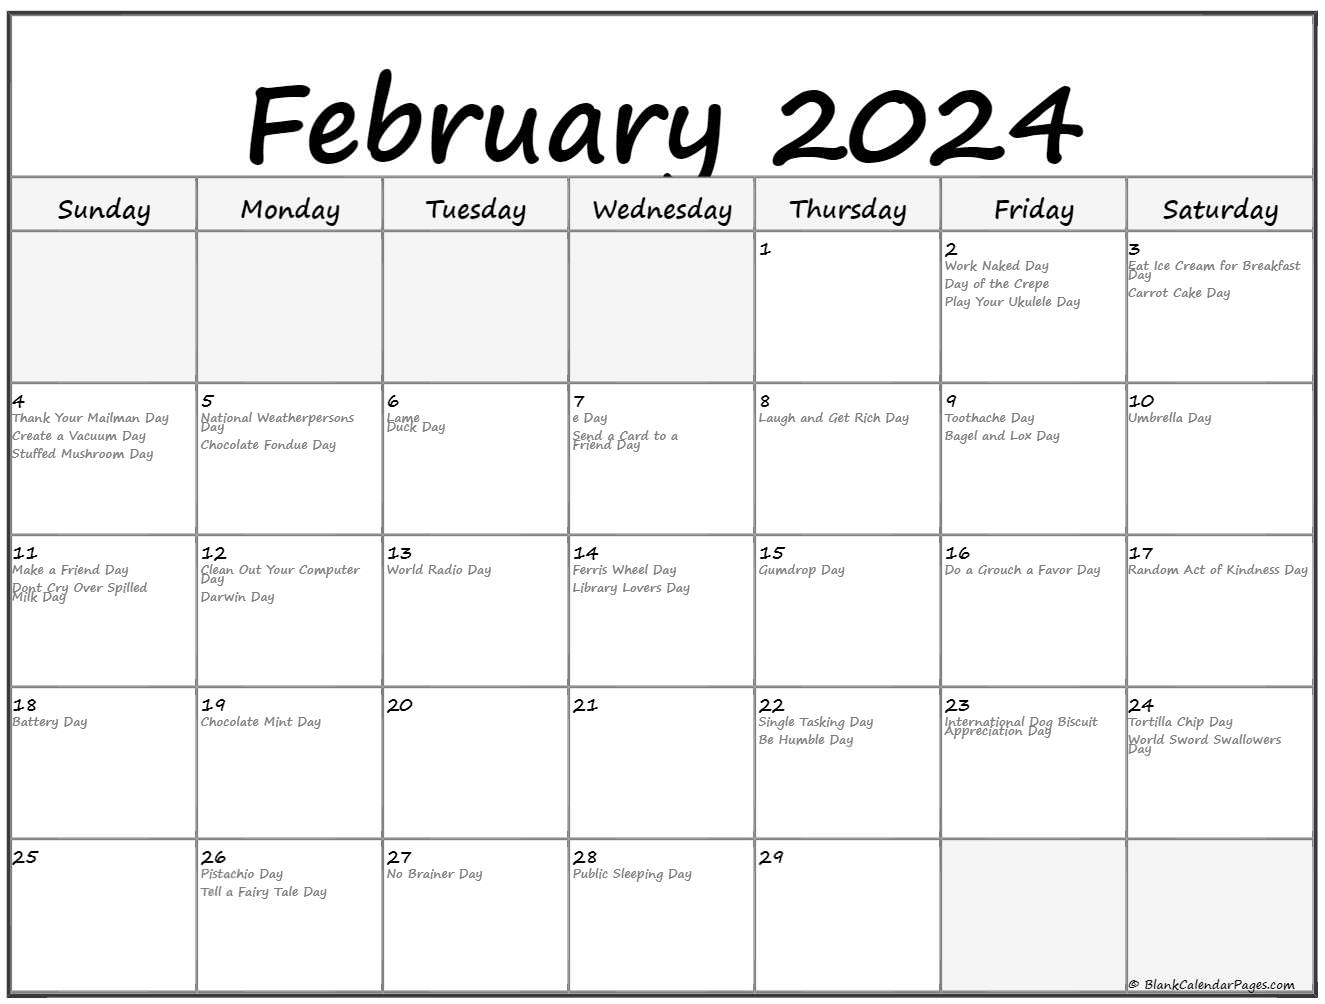 Funny Holiday Calendar 2022 February 2022 With Holidays Calendar